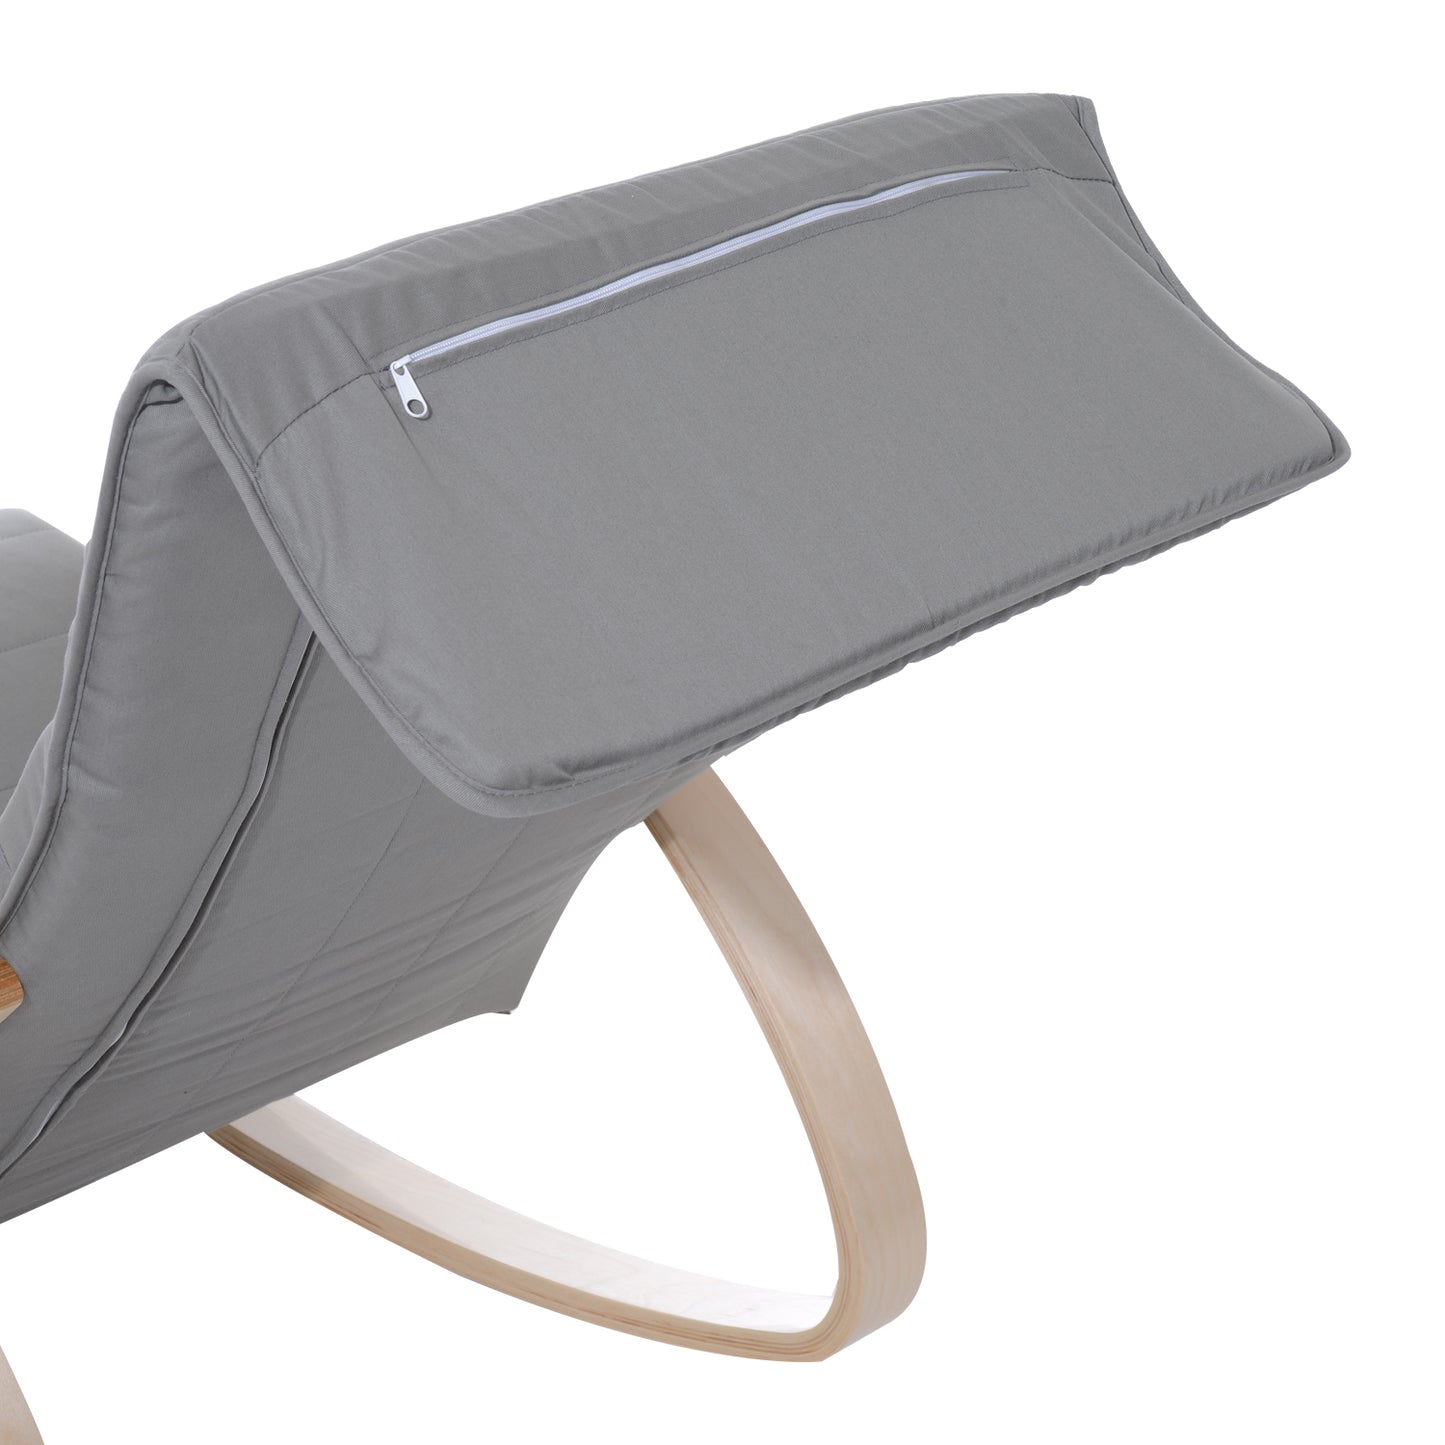 HOMCOM Rocking Chair W/Adjustable Footrest & Side Pocket-Grey